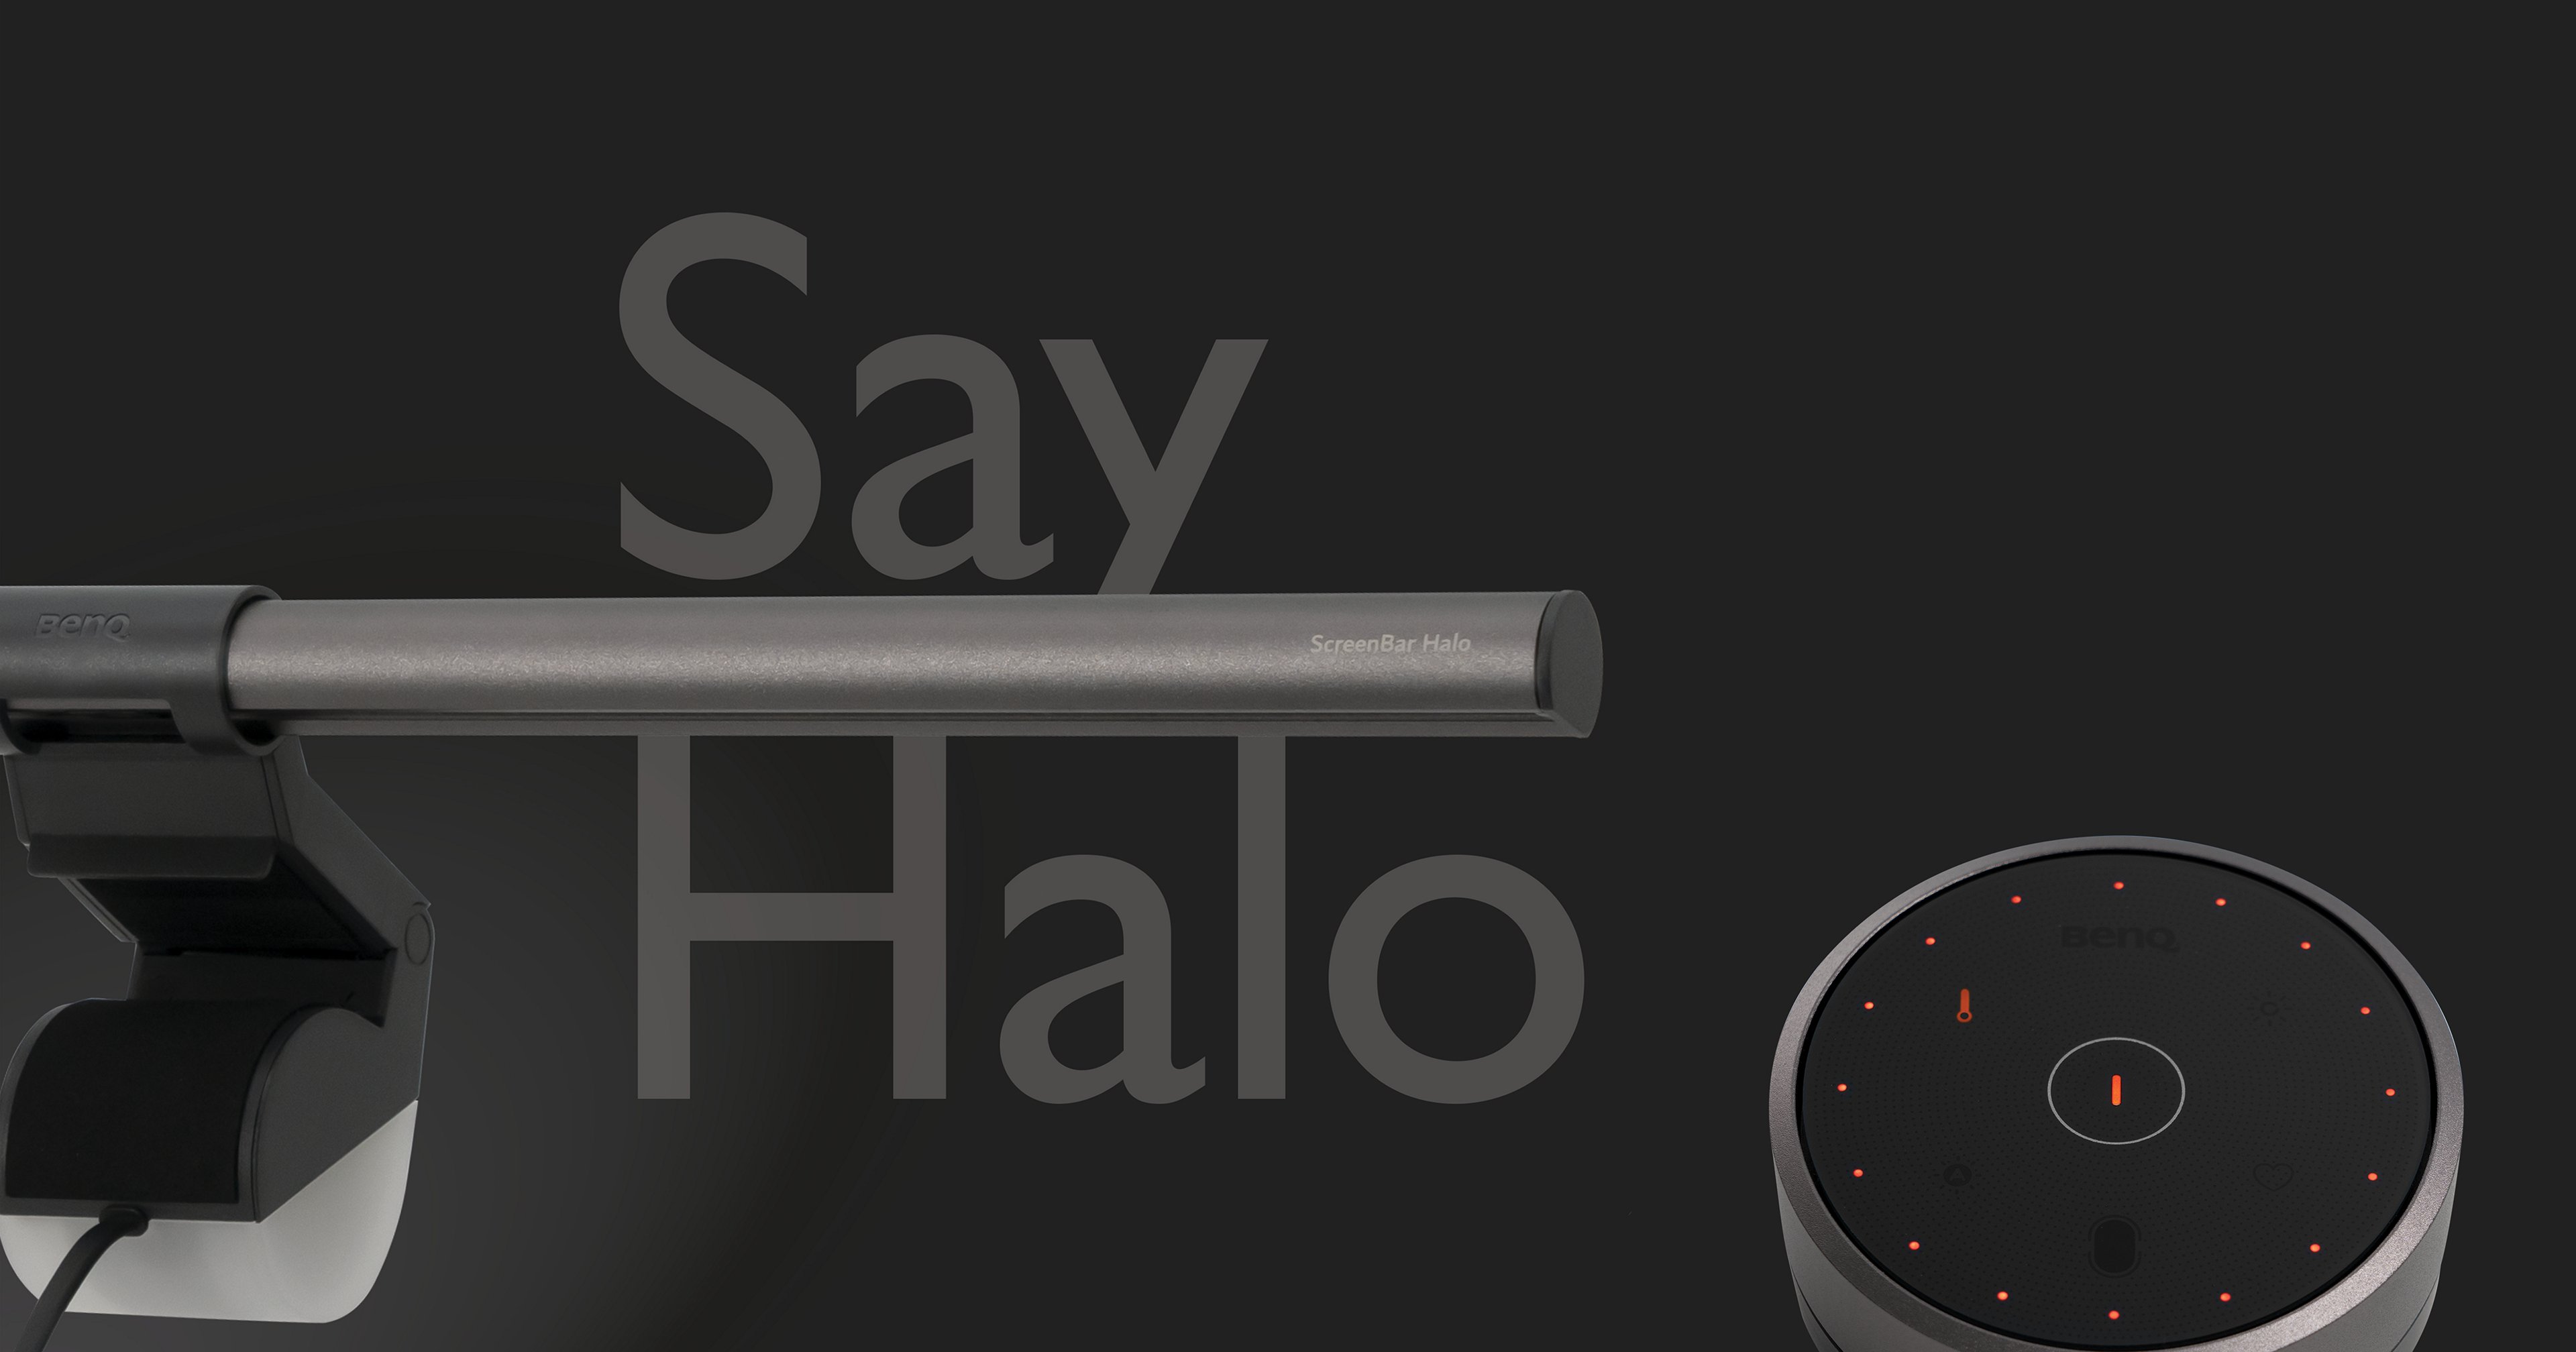 BenQ Launches New Eye-care Monitor Light, Screenbar Halo with Front & Back Illumination